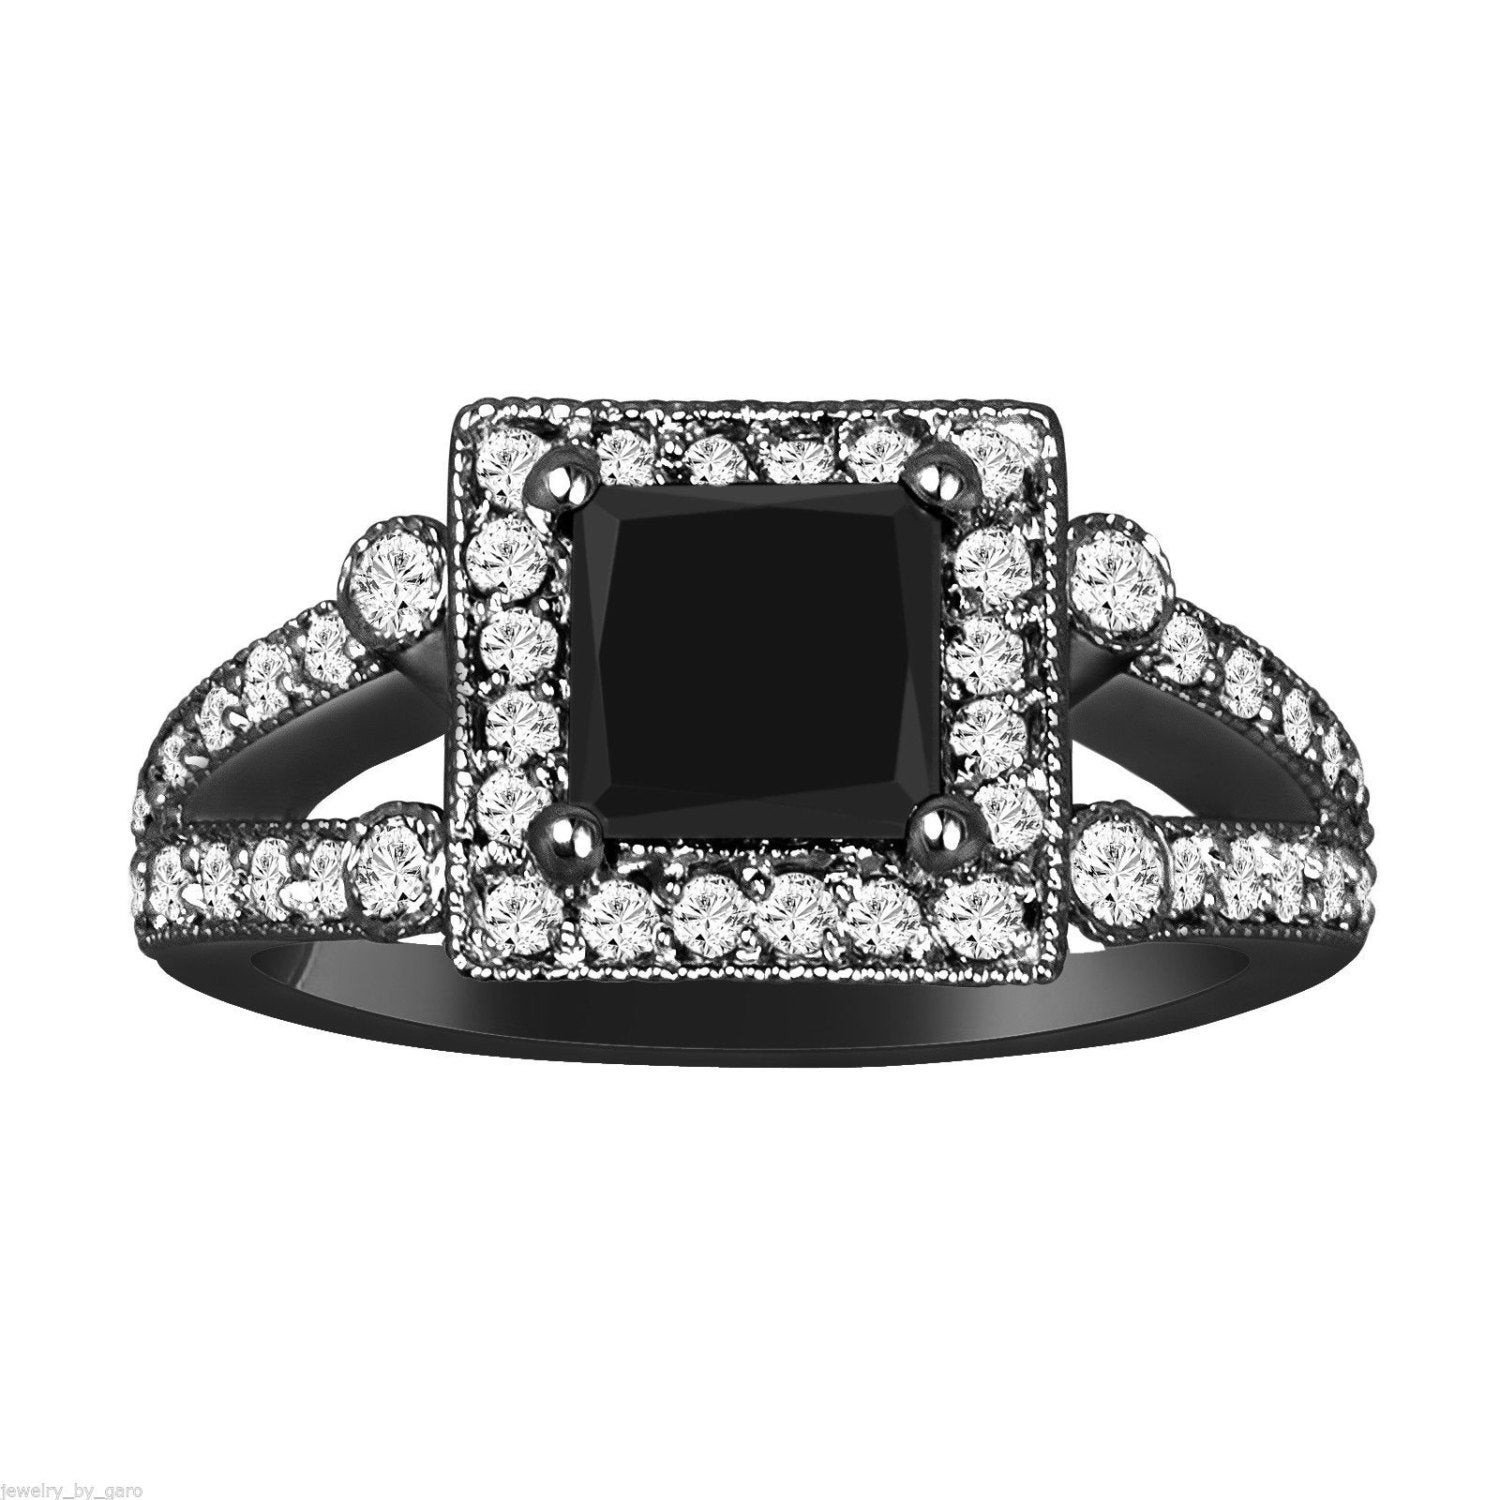 Princess Cut Black Diamond Engagement Rings
 Princess Cut Black Diamond Engagement Ring 1 82 Carat Vintage